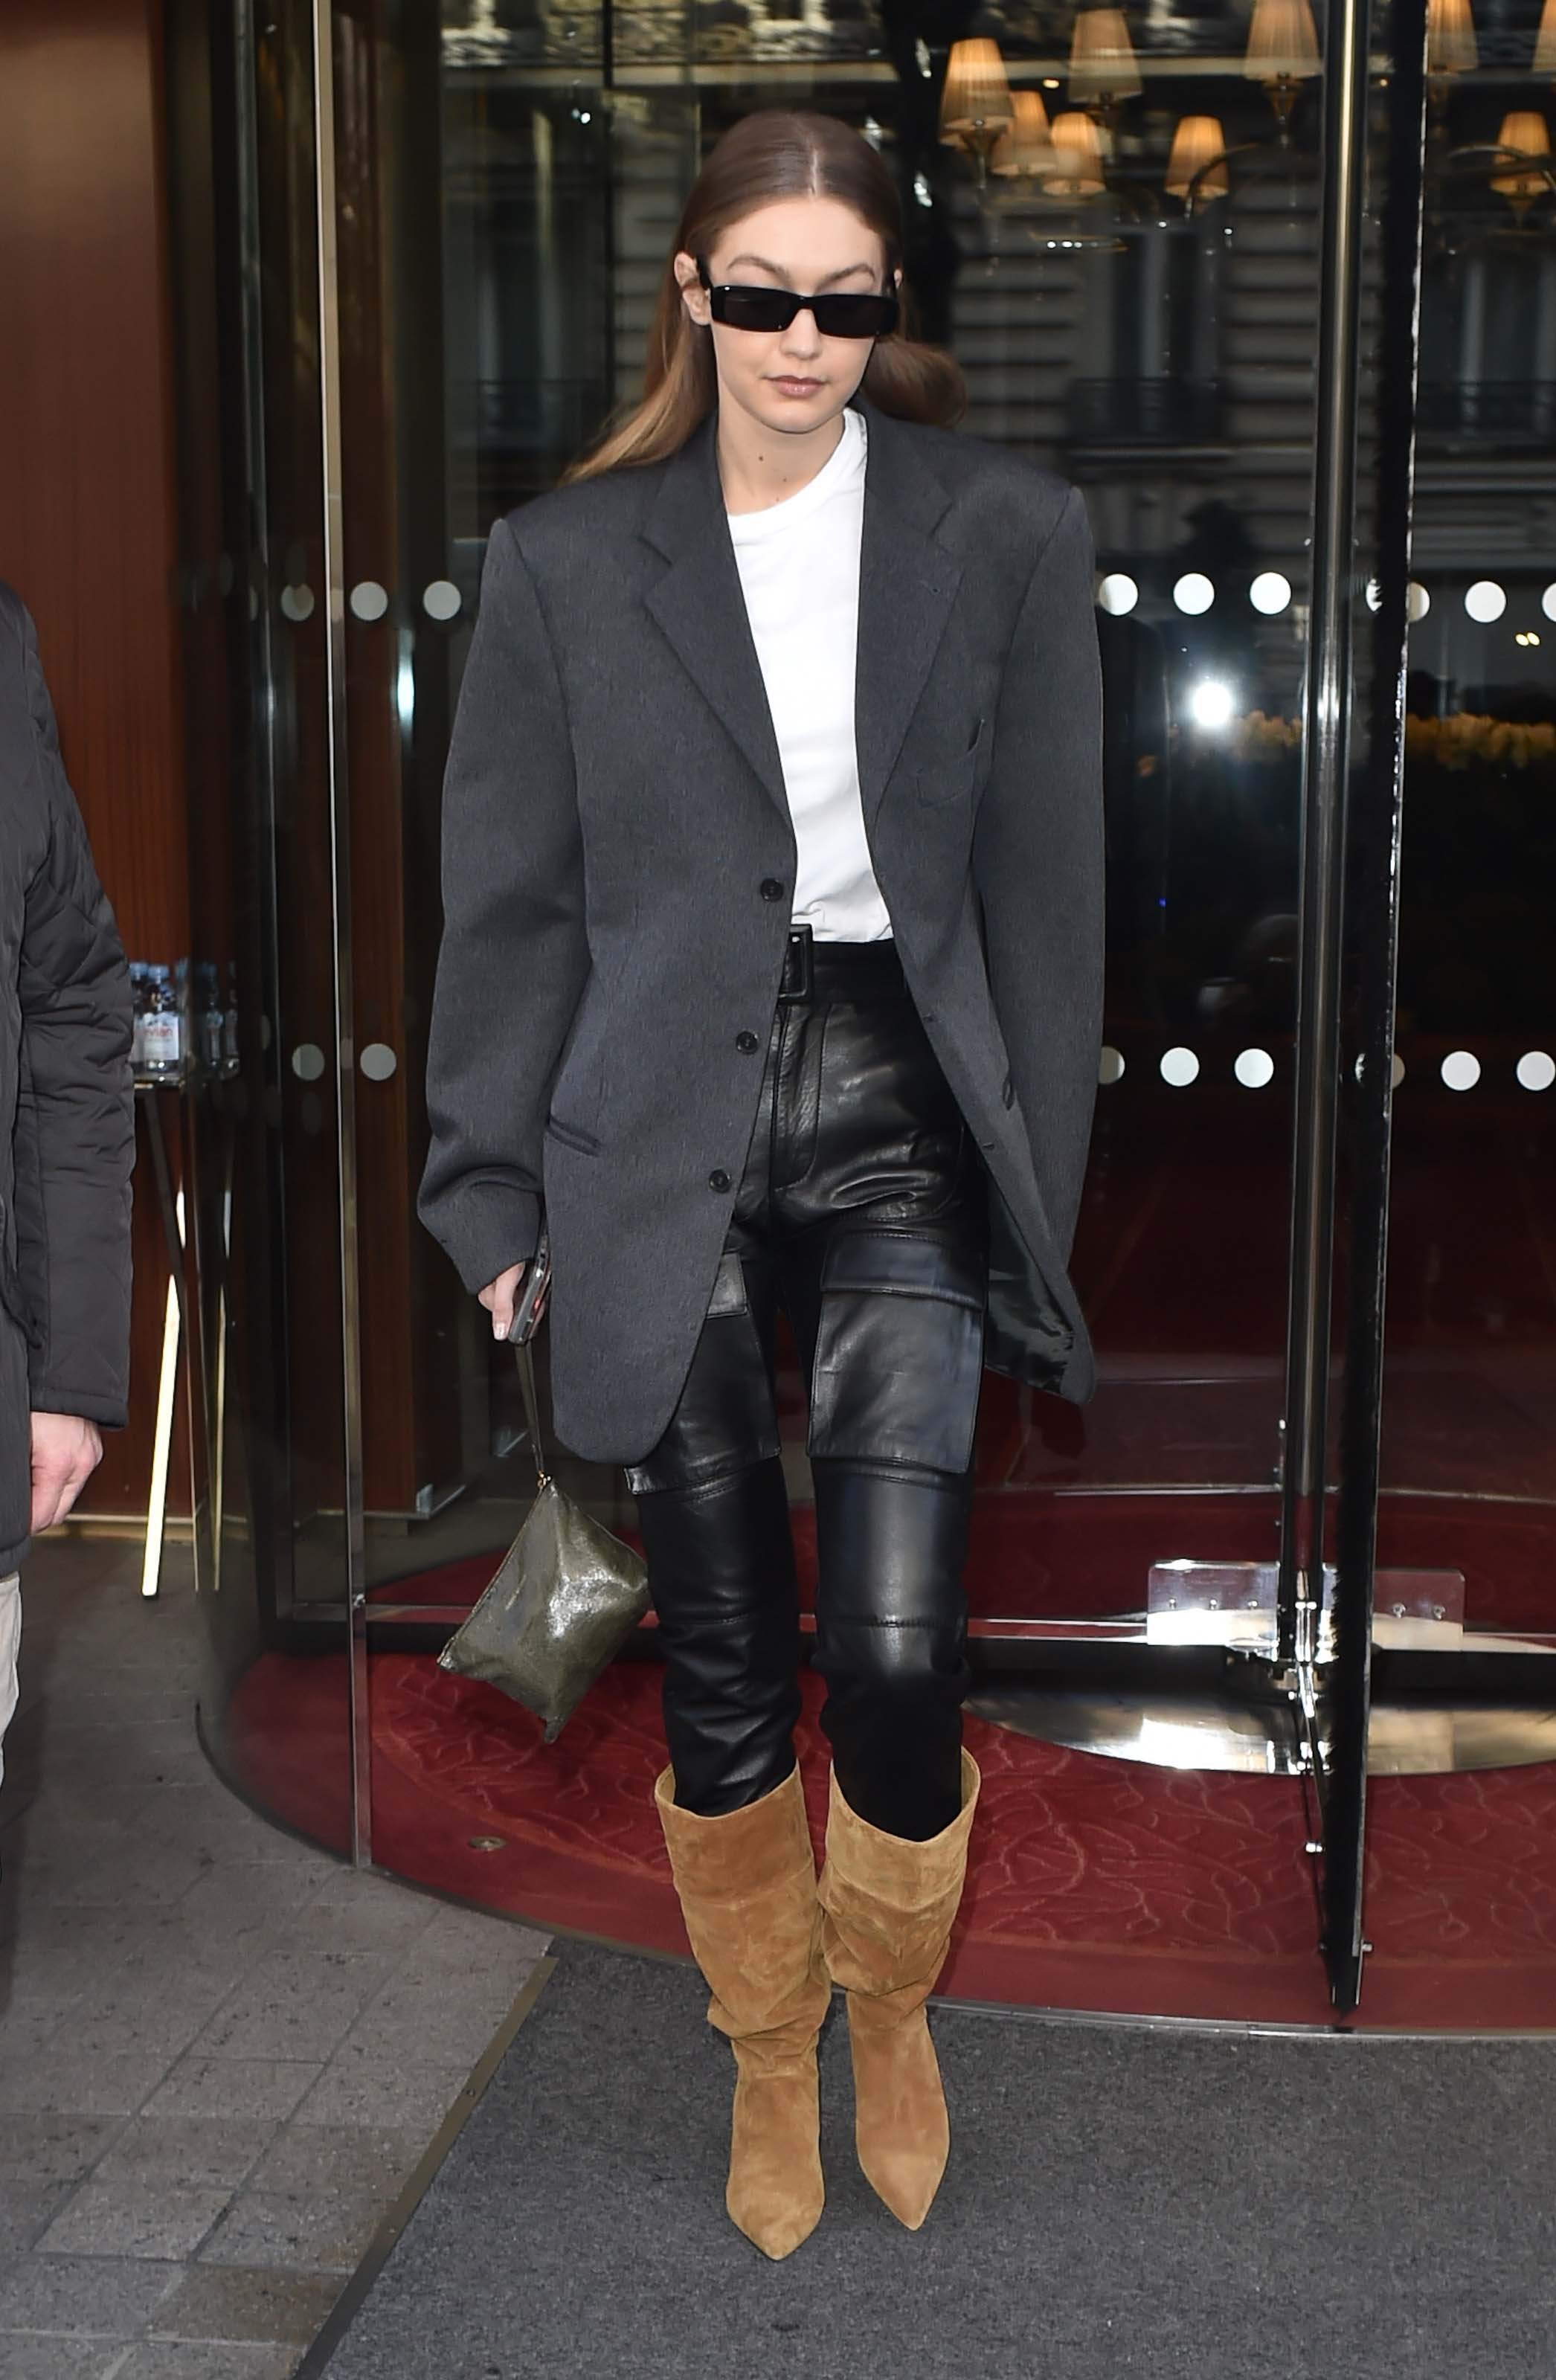 Gigi Hadid seen leaving the Royal Monceau hotel